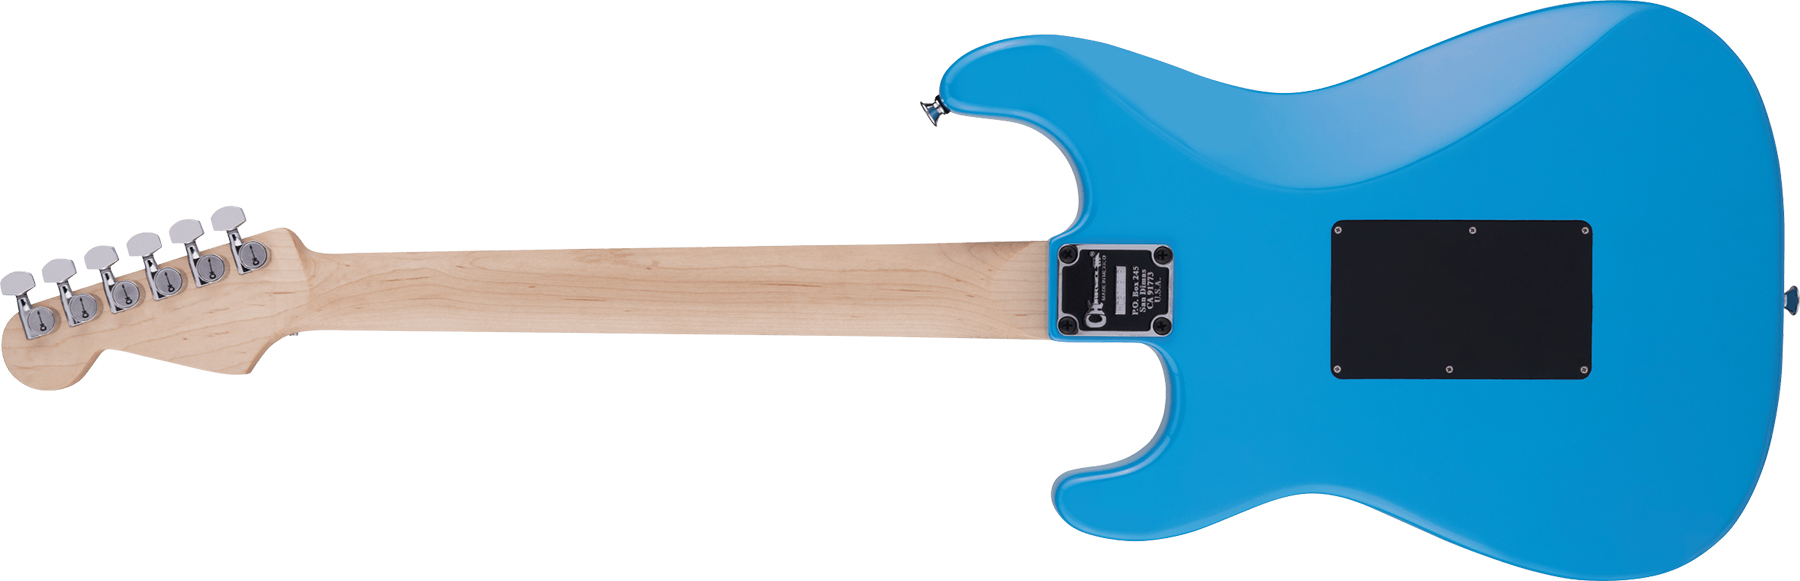 Charvel So-cal Style 1 Hsh Fr E Pro-mod Seymour Duncan Eb - Robbin's Egg Blue - Str shape electric guitar - Variation 1